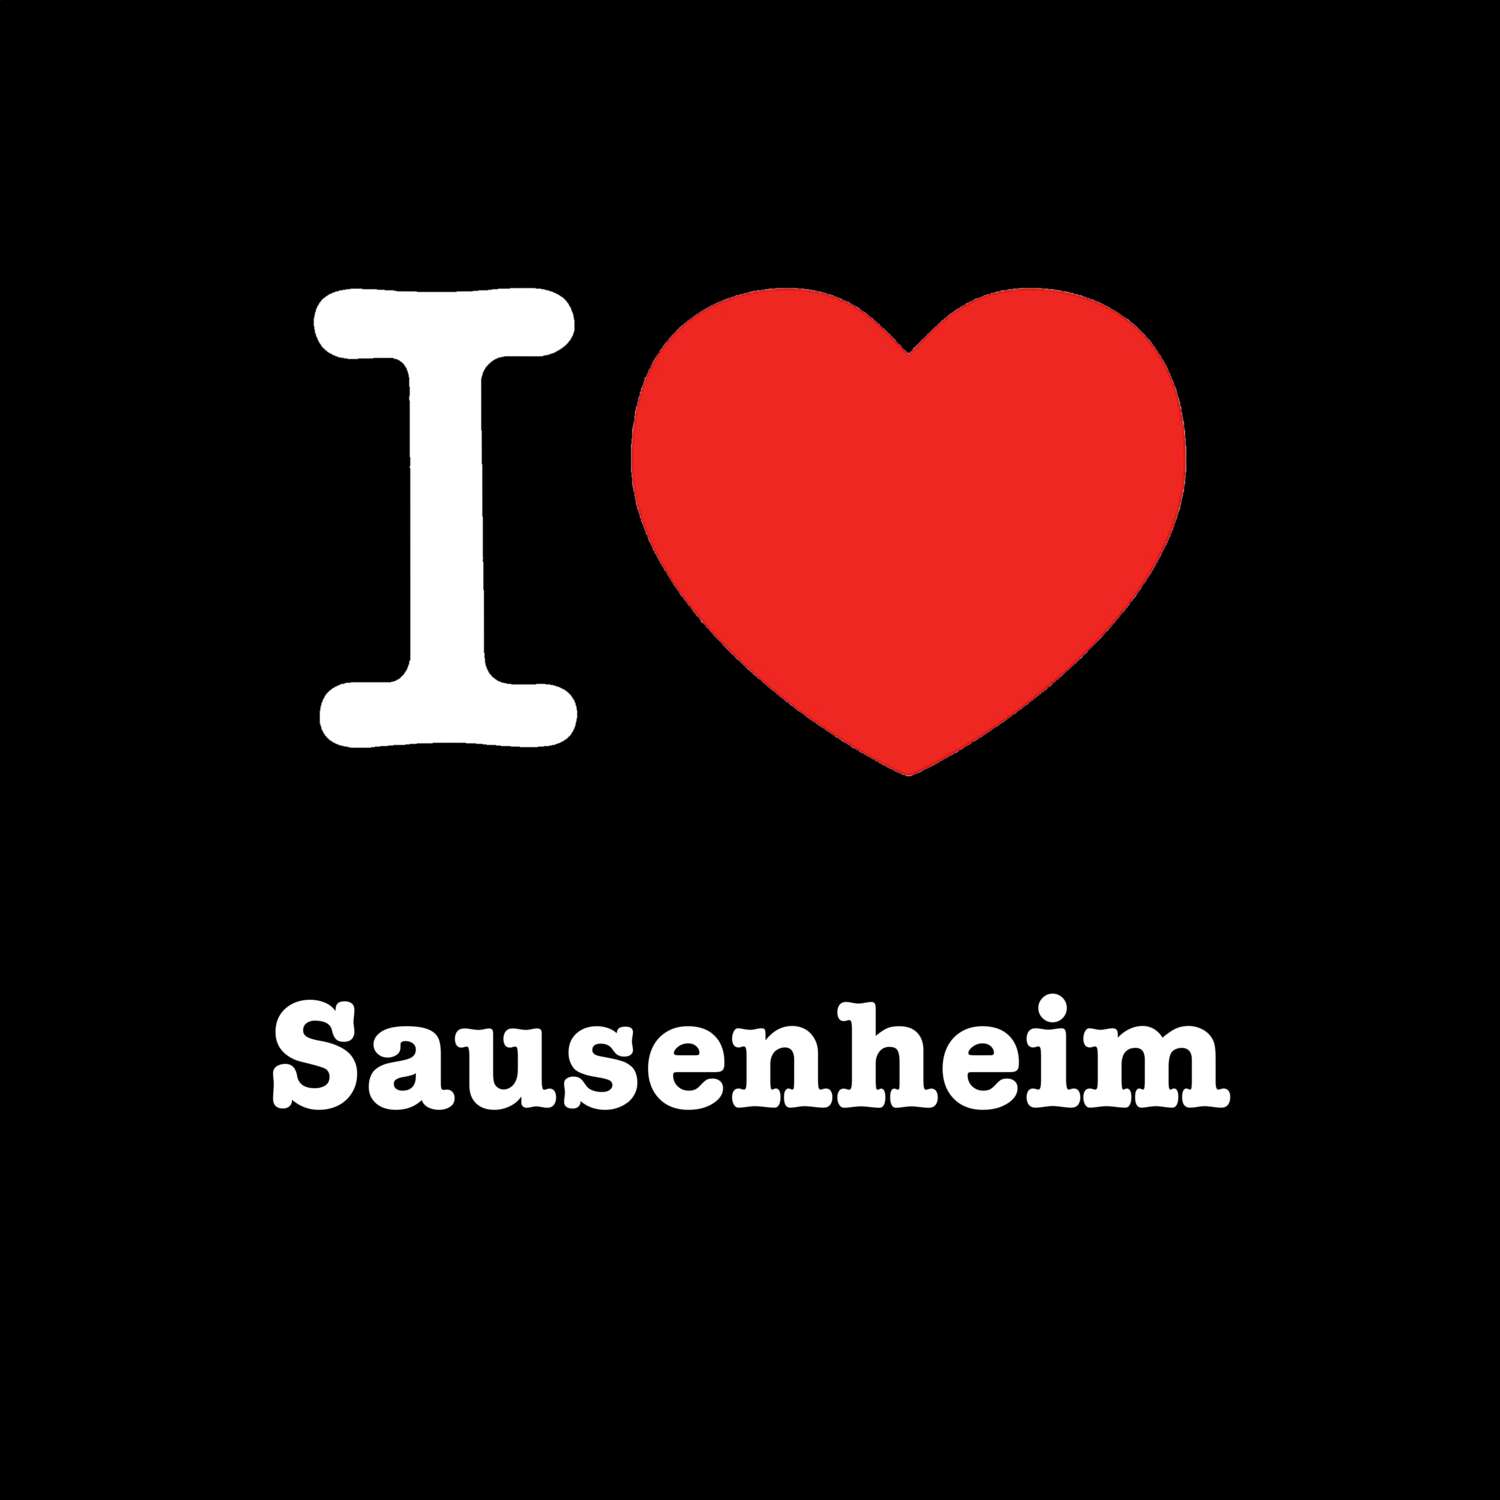 Sausenheim T-Shirt »I love«